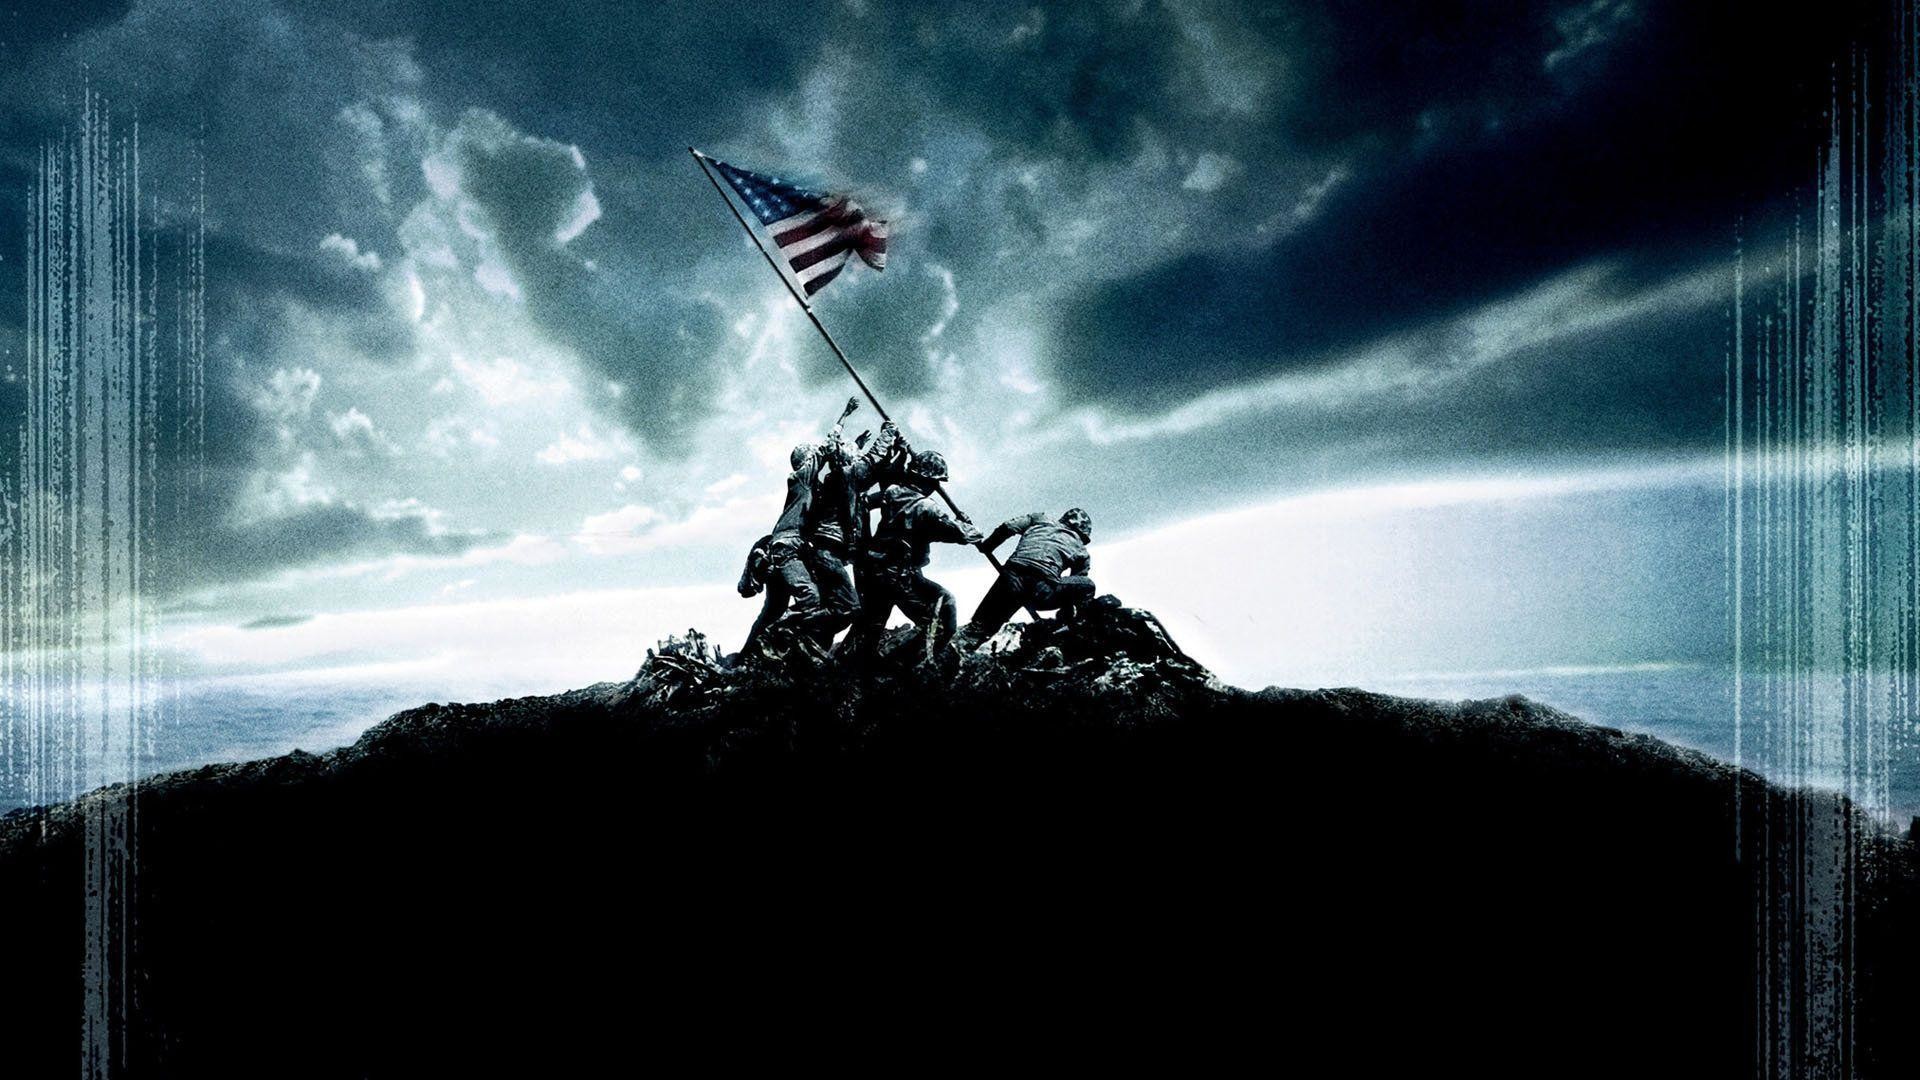 Iwo Jima Flag Raising Wallpaper Image